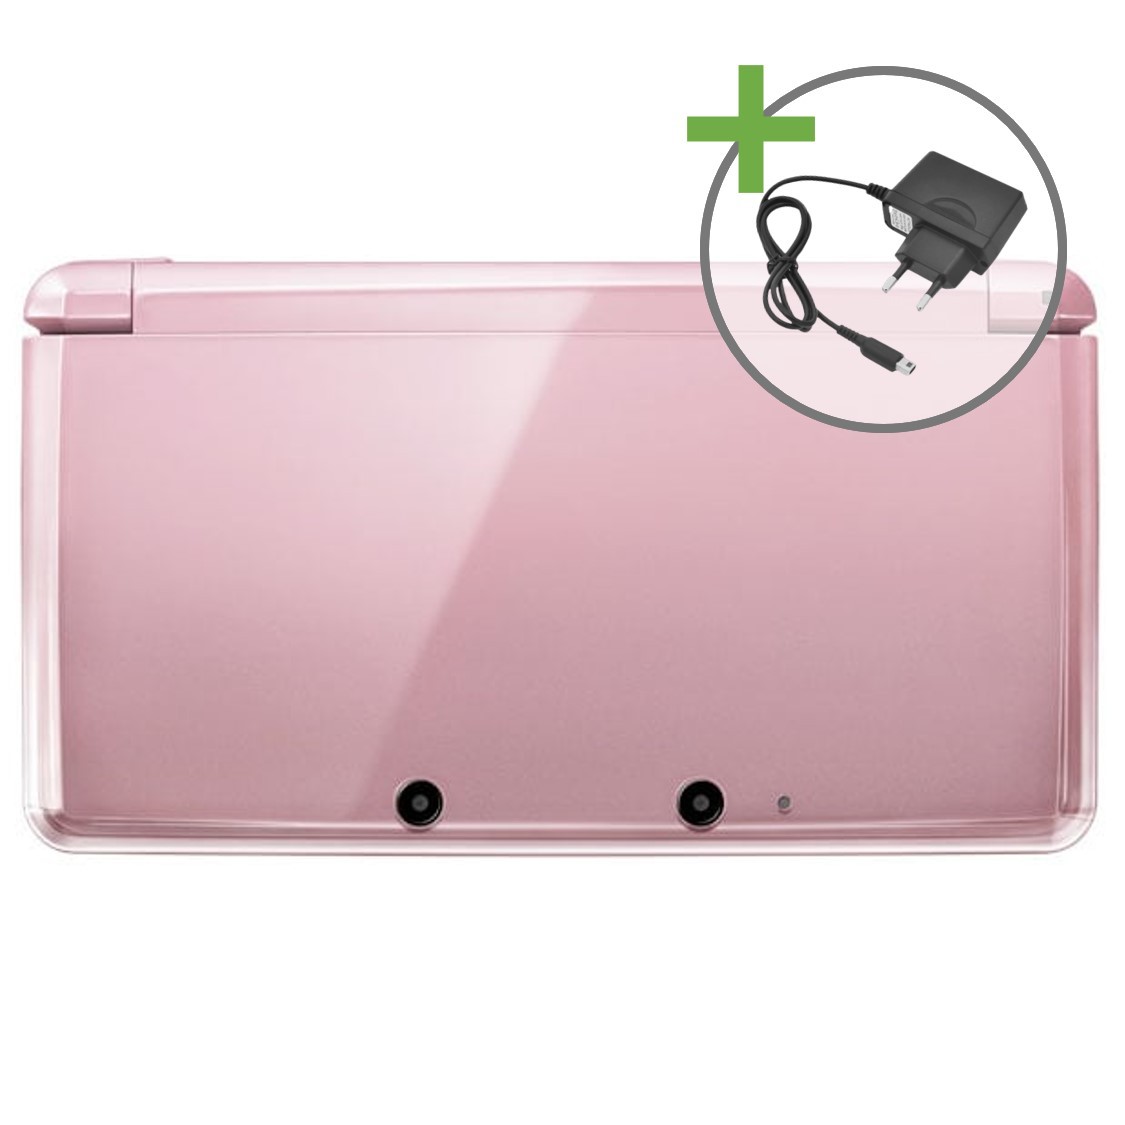 Nintendo 3DS - Coral Pink - Nintendo 3DS Hardware - 3